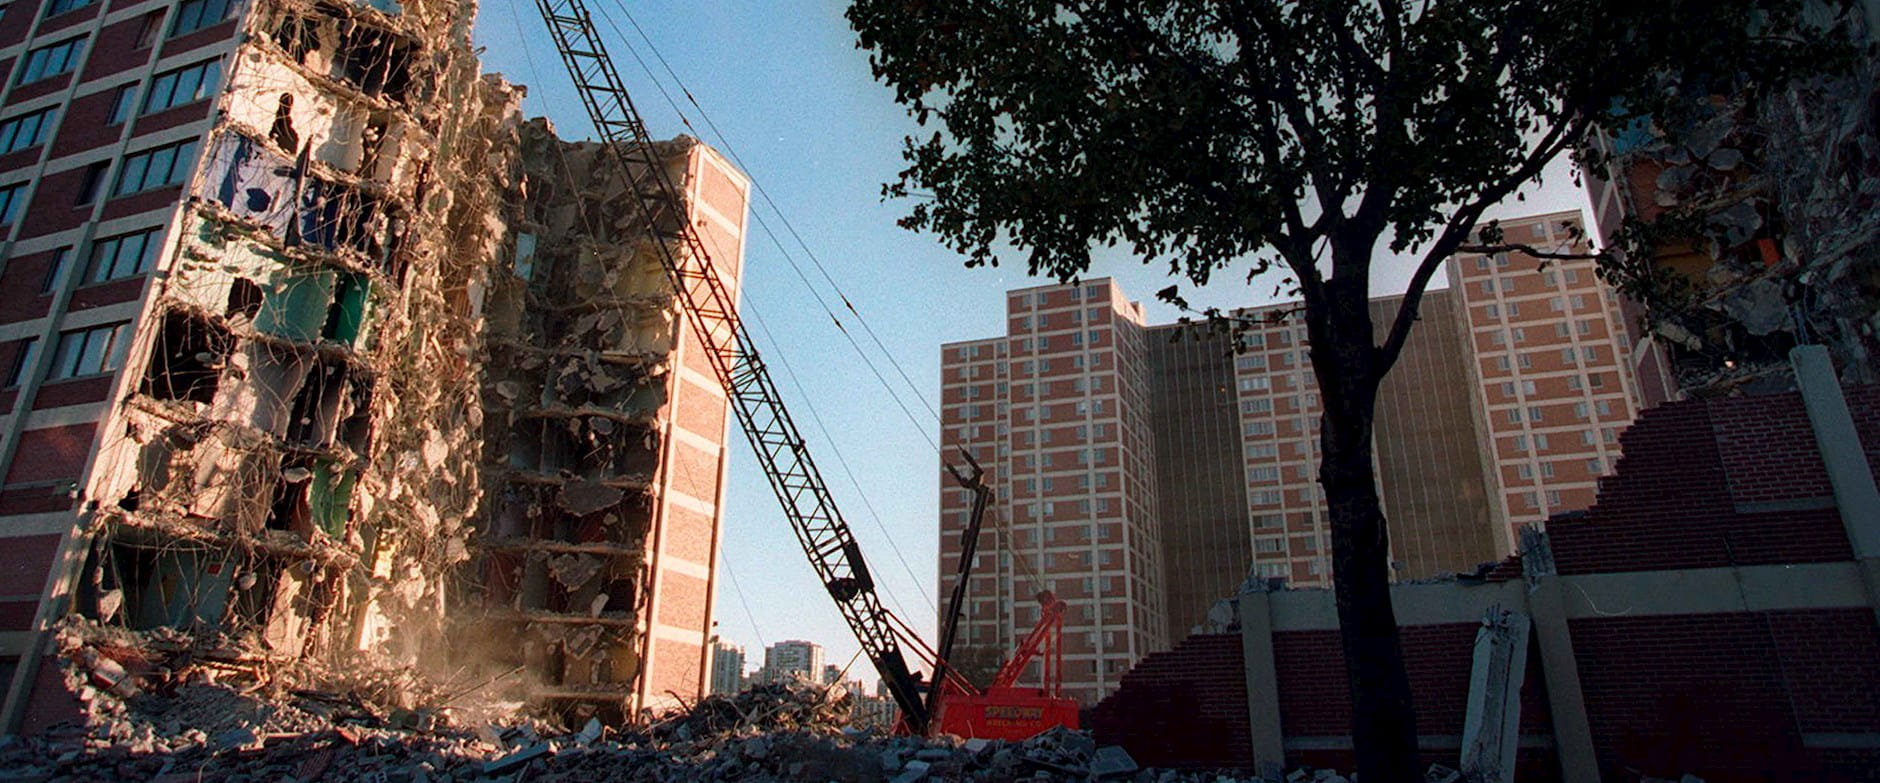 Demolition of Cabrini-Green in Chicago